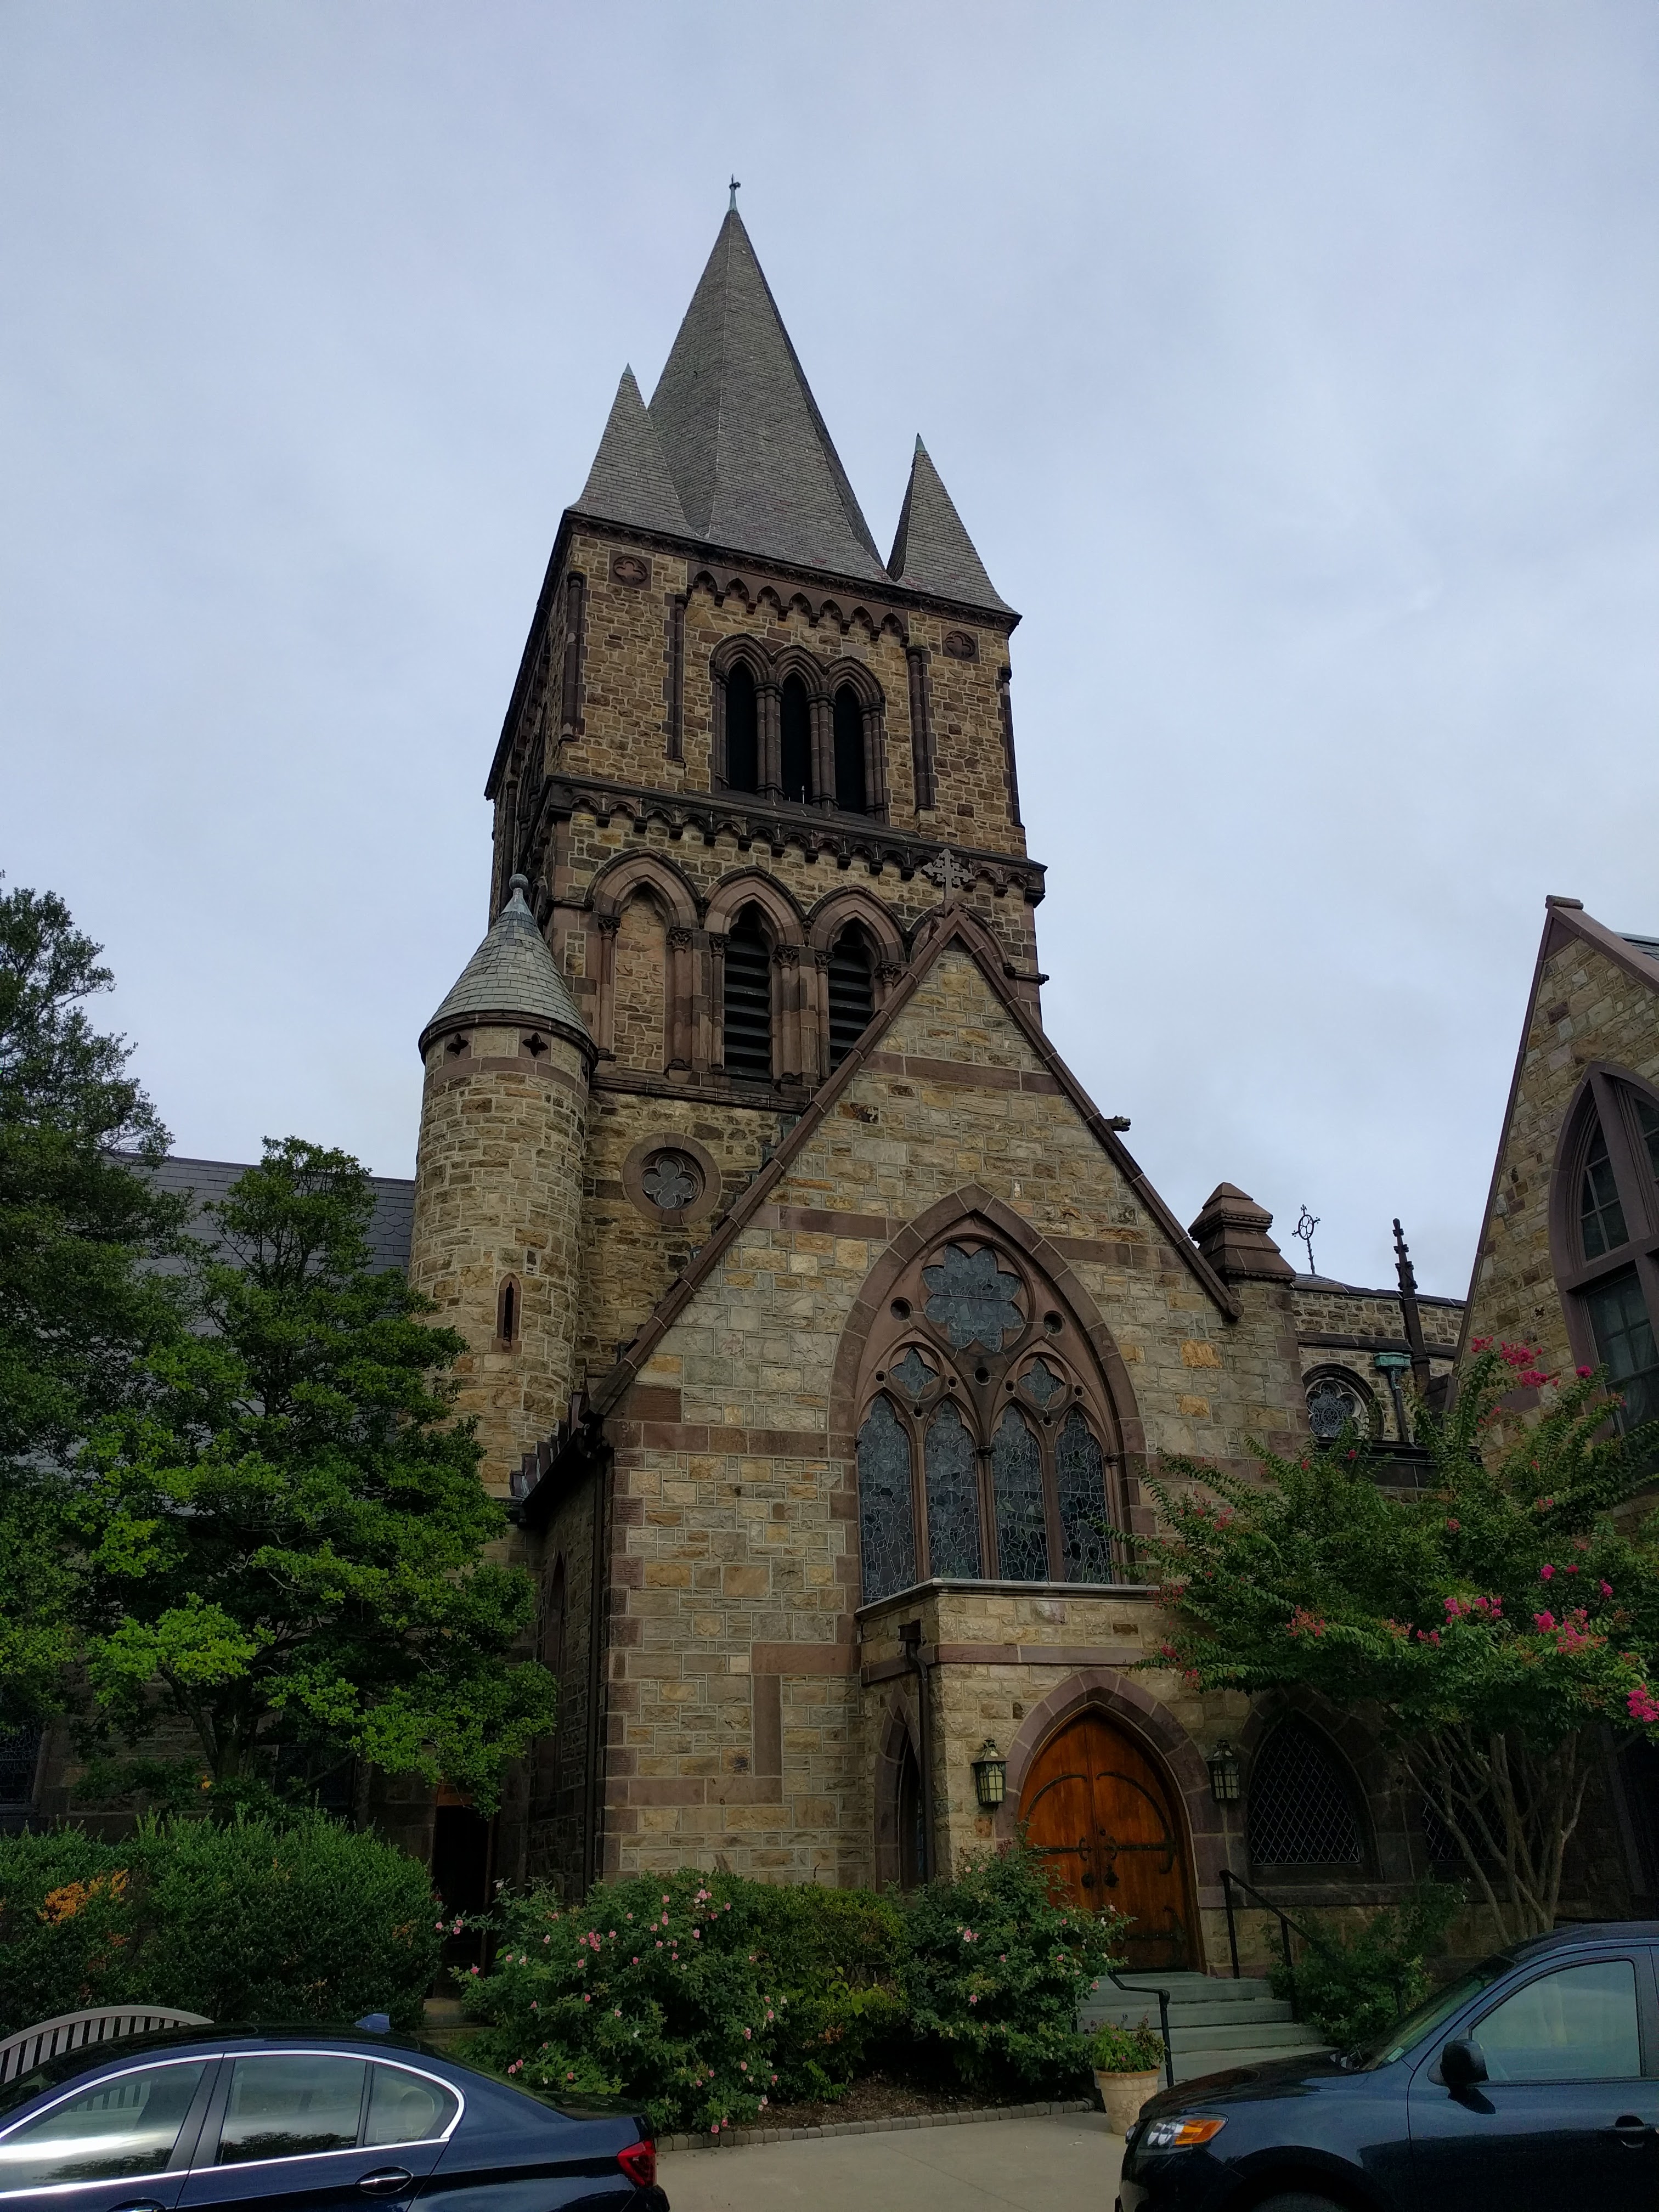 Upjohn's Trinity Church in Princeton, NJ